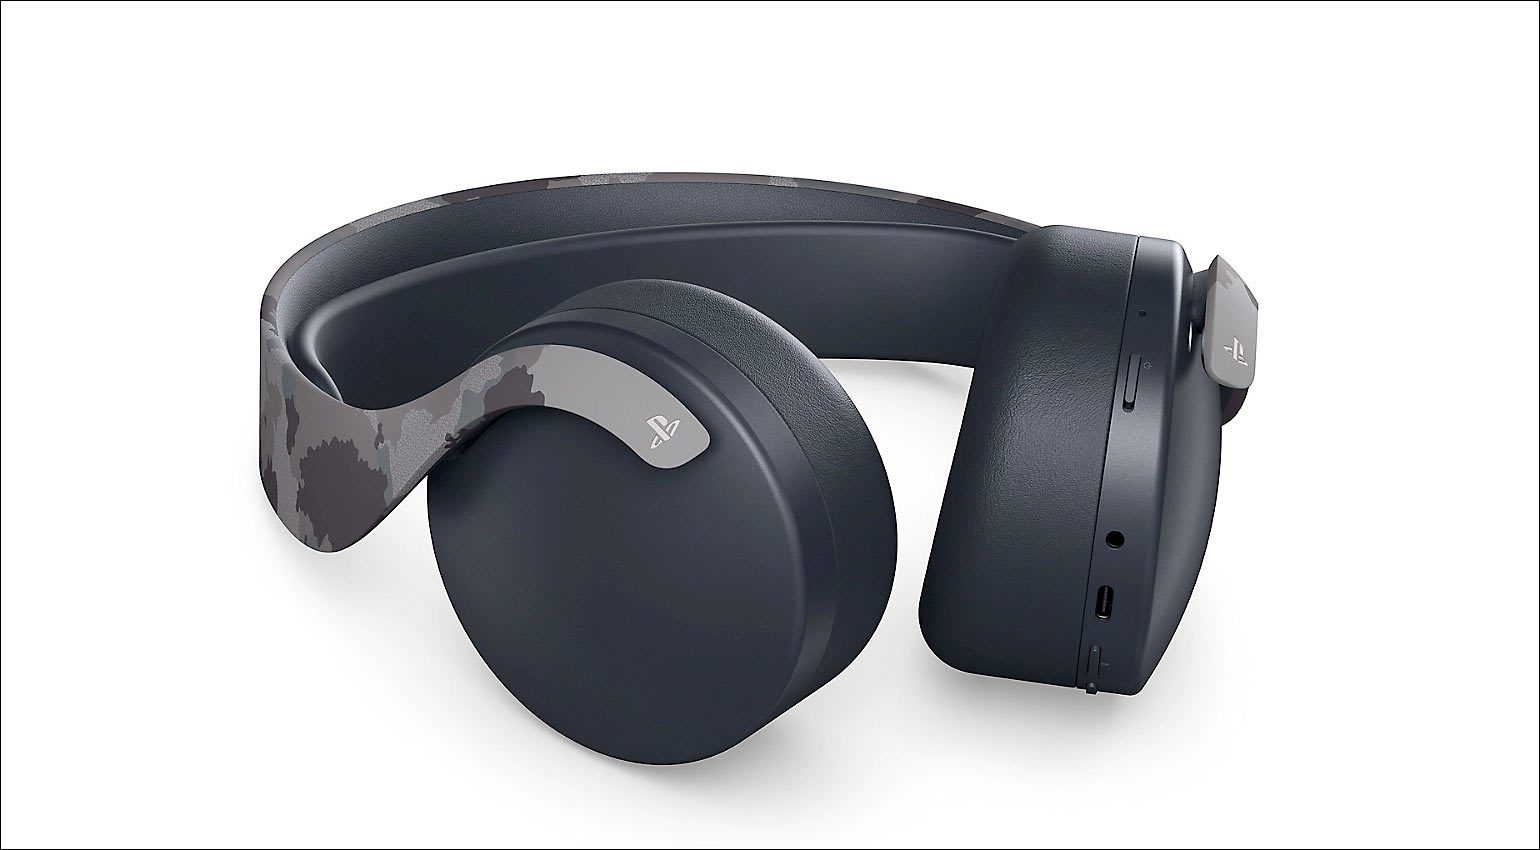 Mit PULSE 3D hat Sony starke Gaming-Kopfhörer im Programm